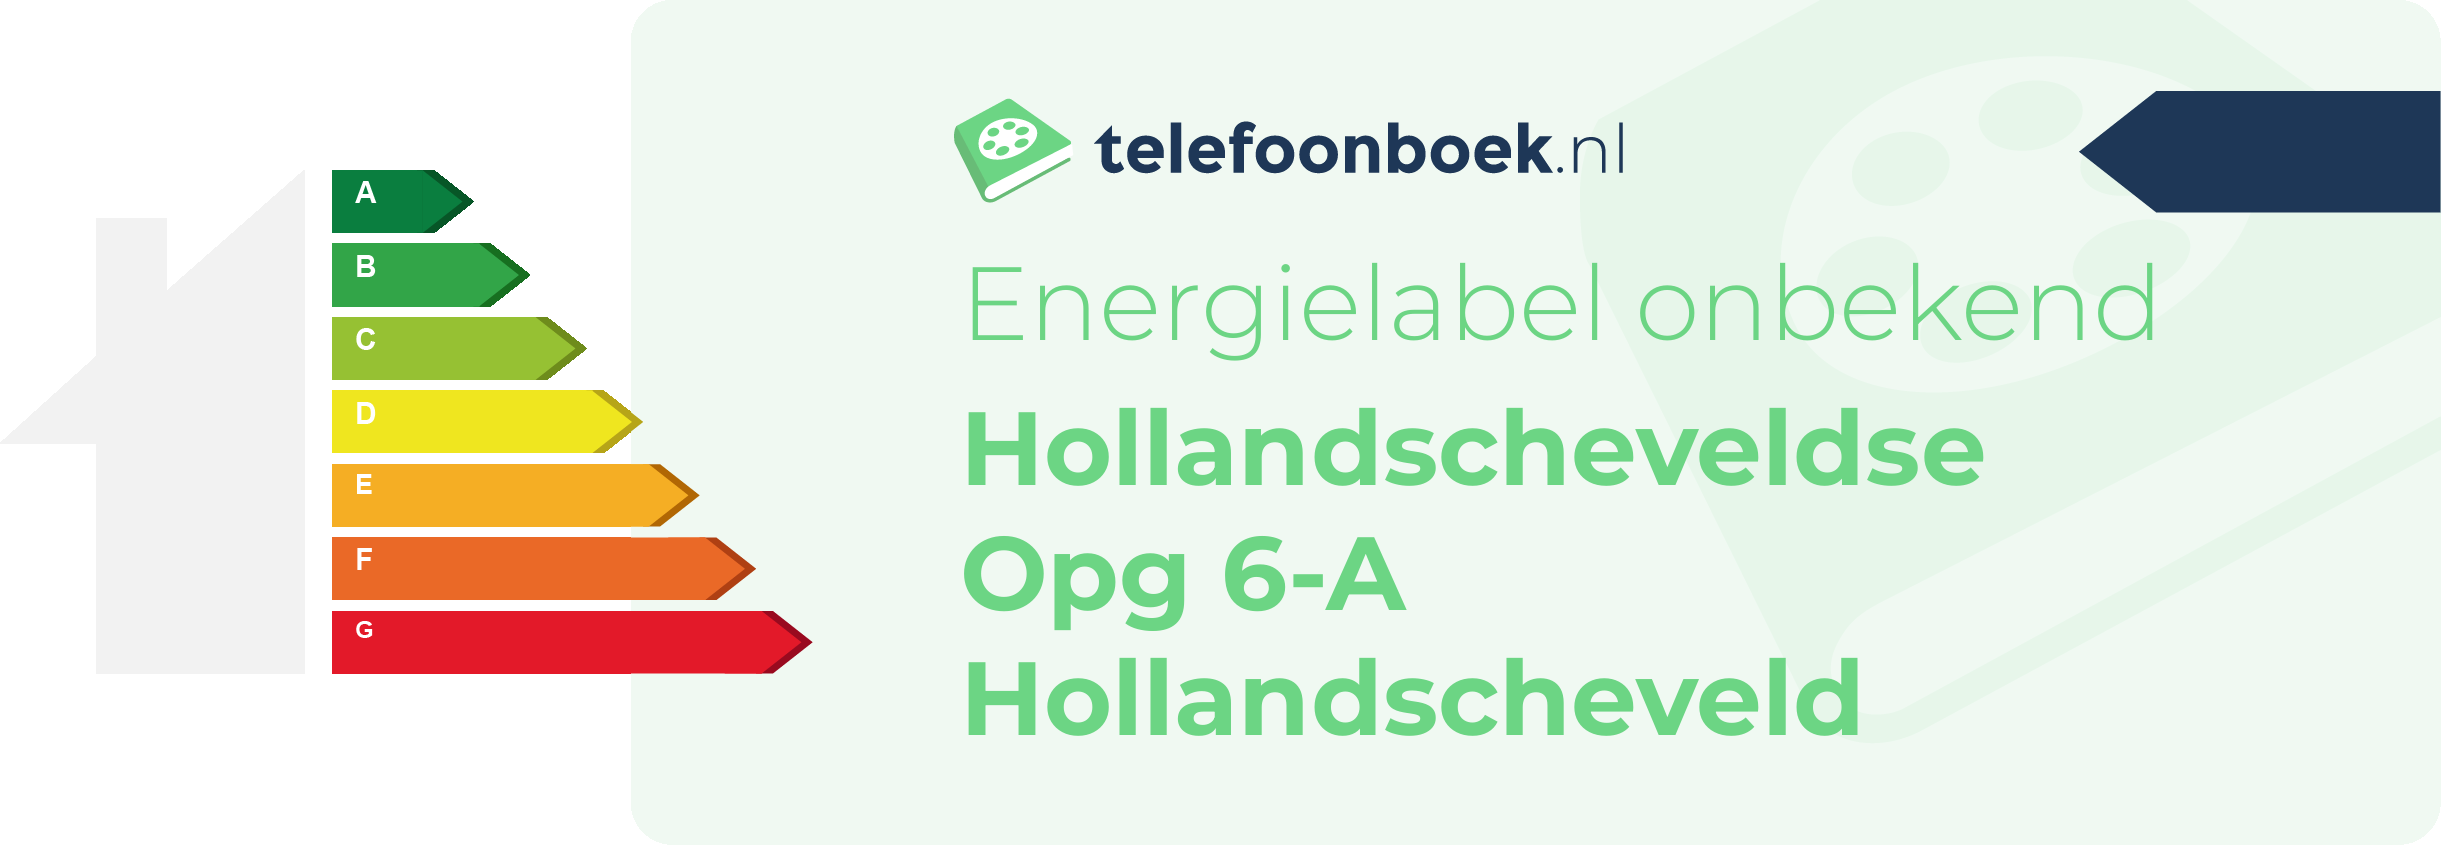 Energielabel Hollandscheveldse Opg 6-A Hollandscheveld